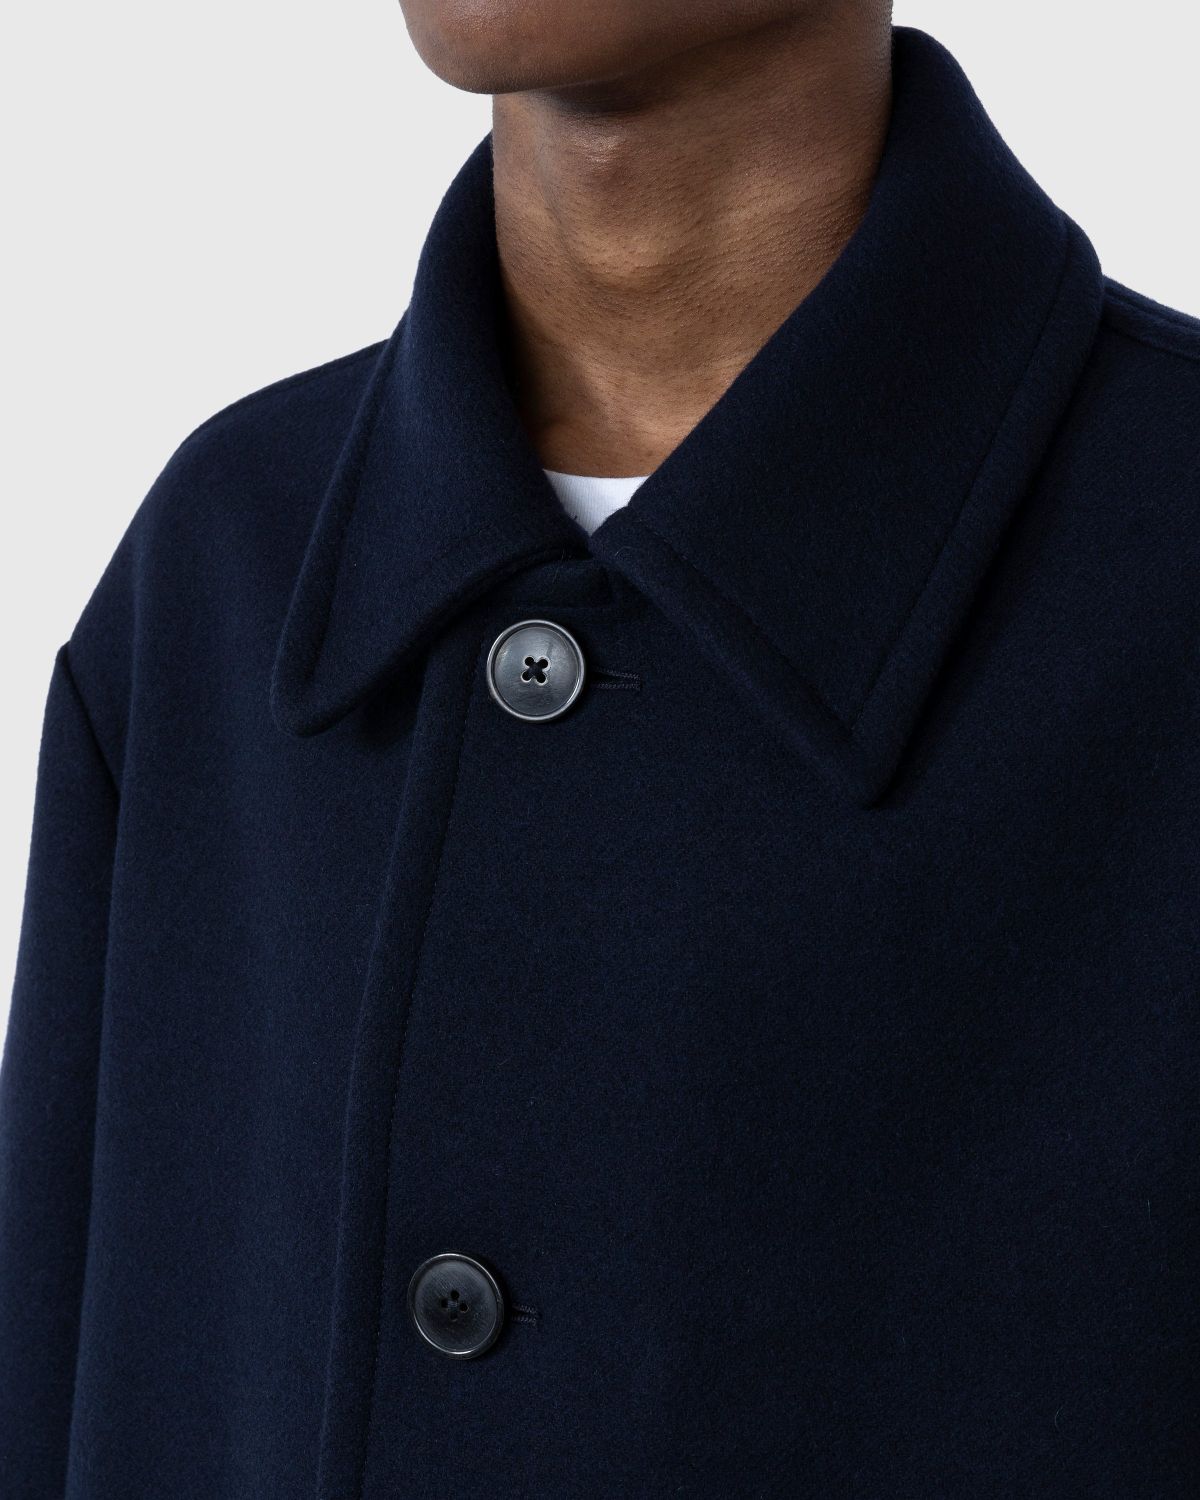 Dries van Noten – Ronnor Workwear Jacket Navy - Outerwear - Blue - Image 7